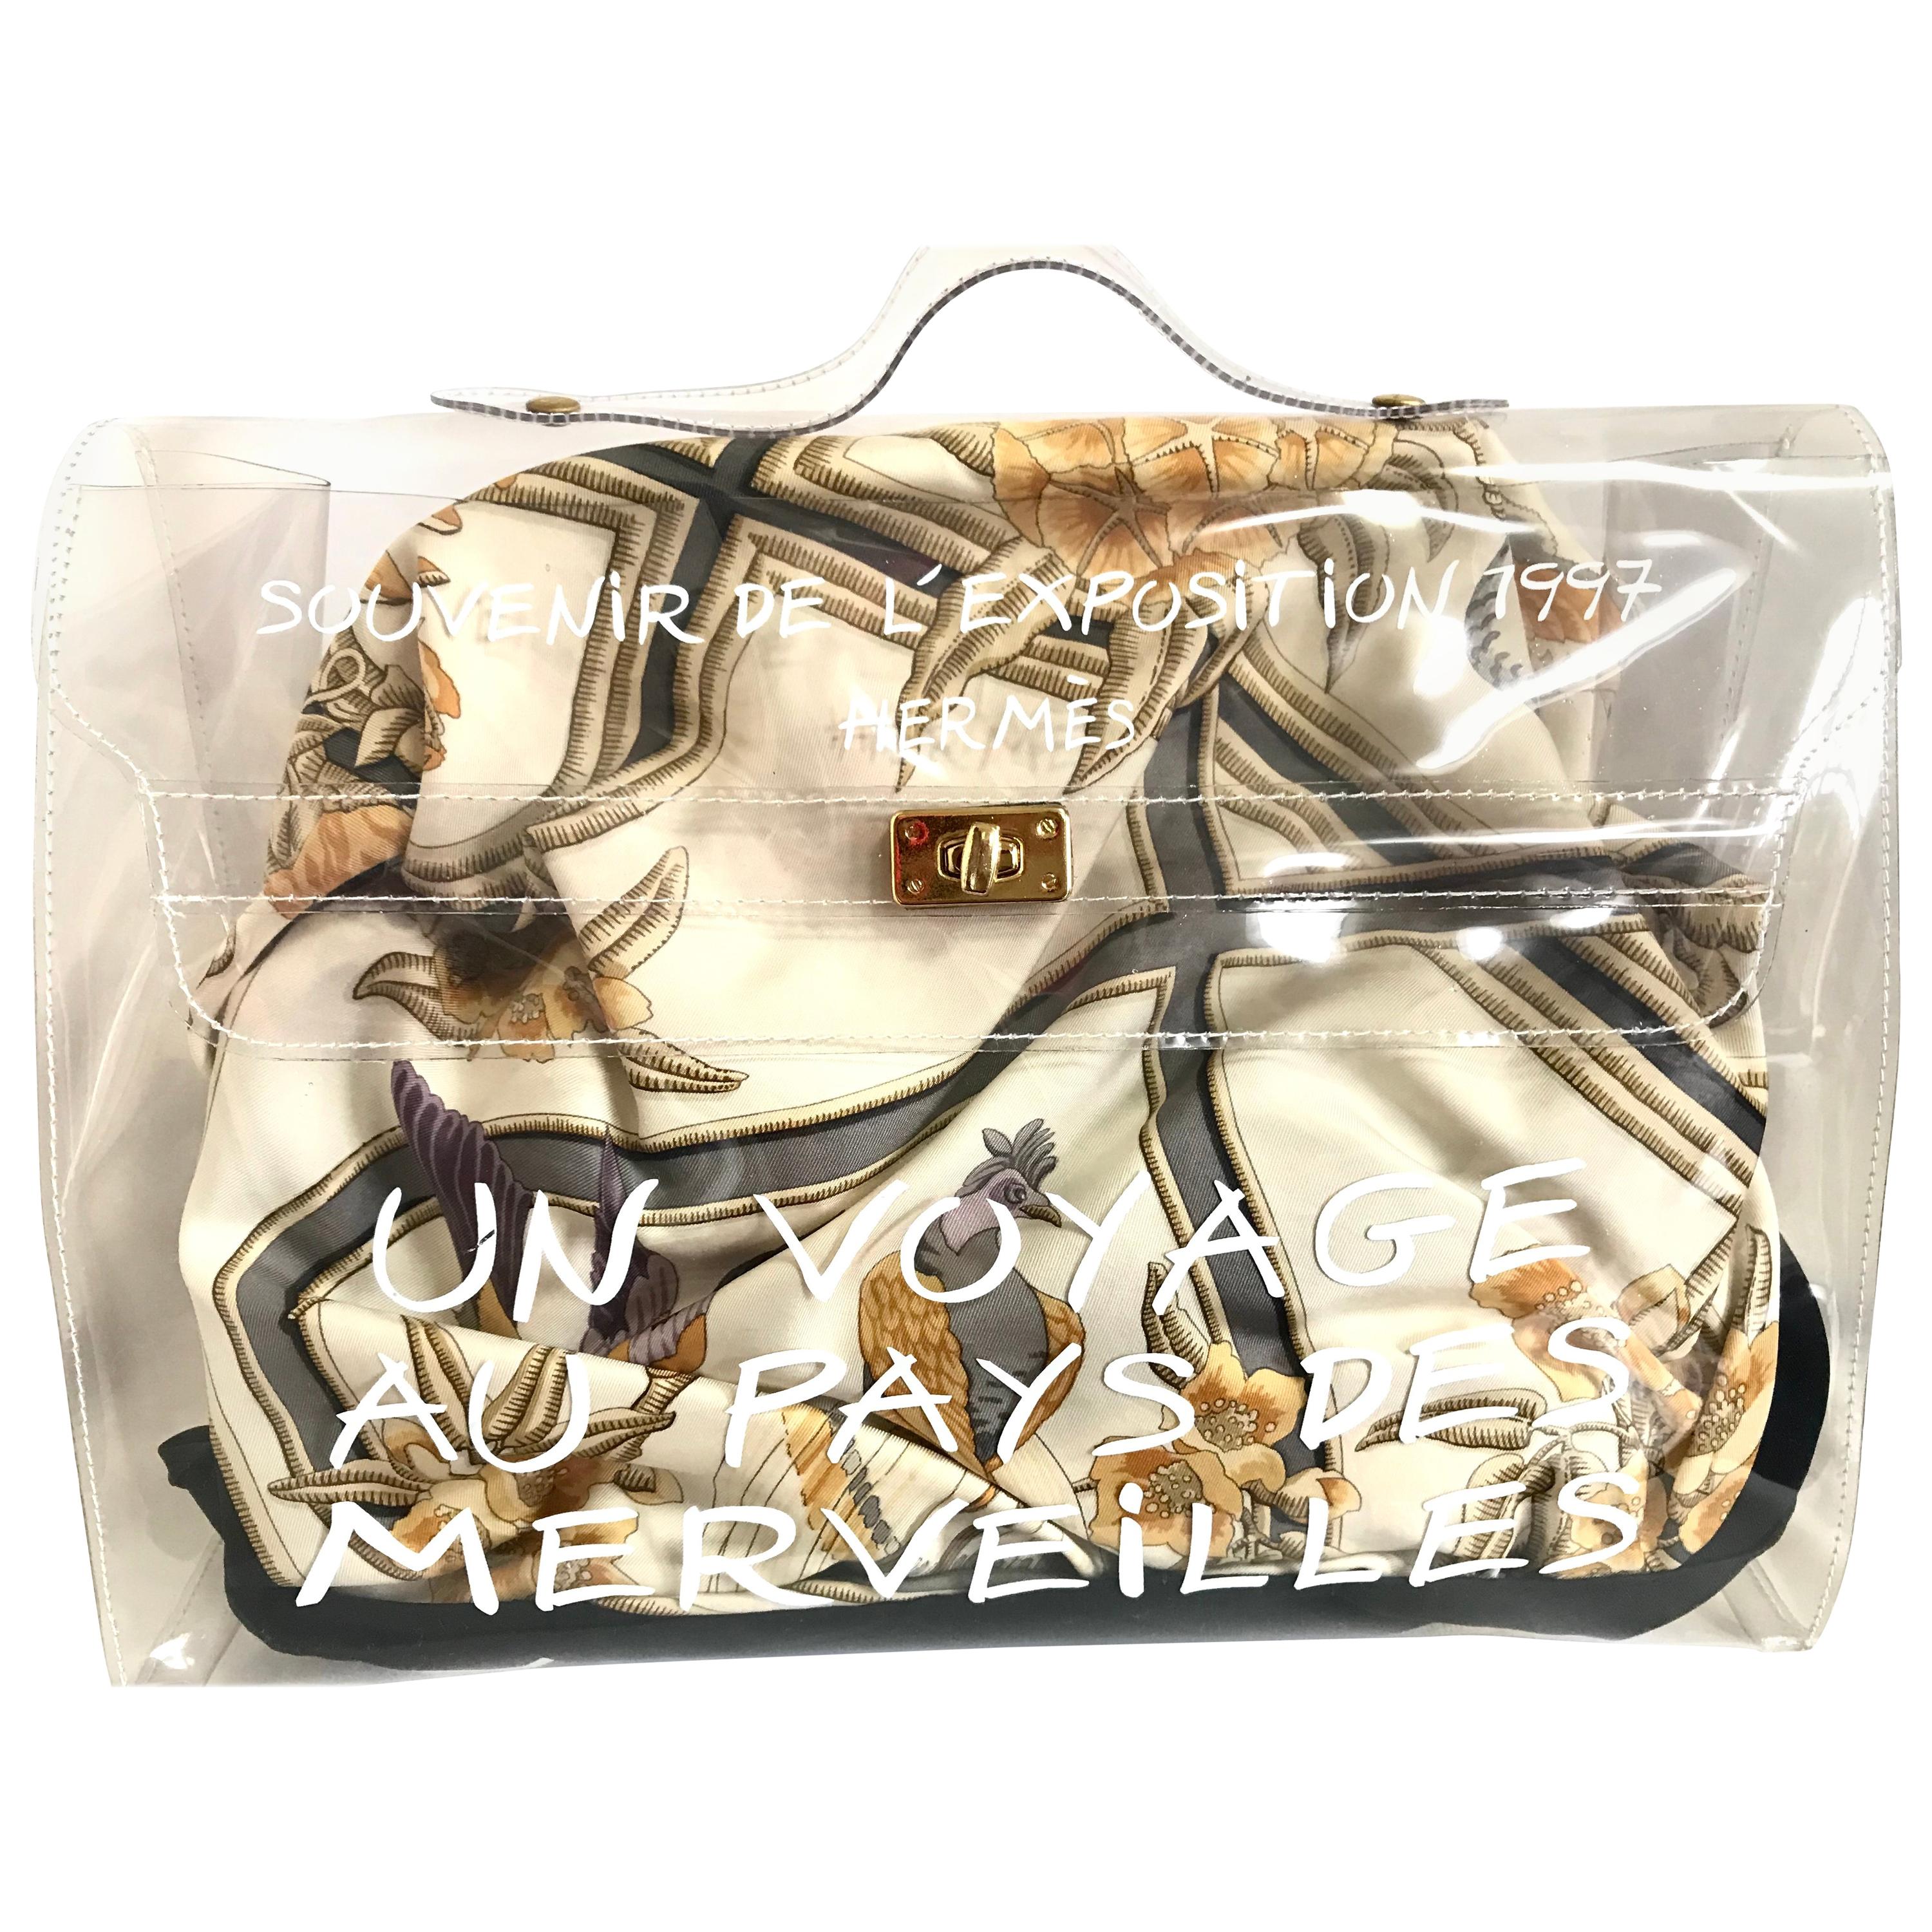 Vintage Hermes transparent clear vinyl Kelly beach bag, Japan limited Edition. 